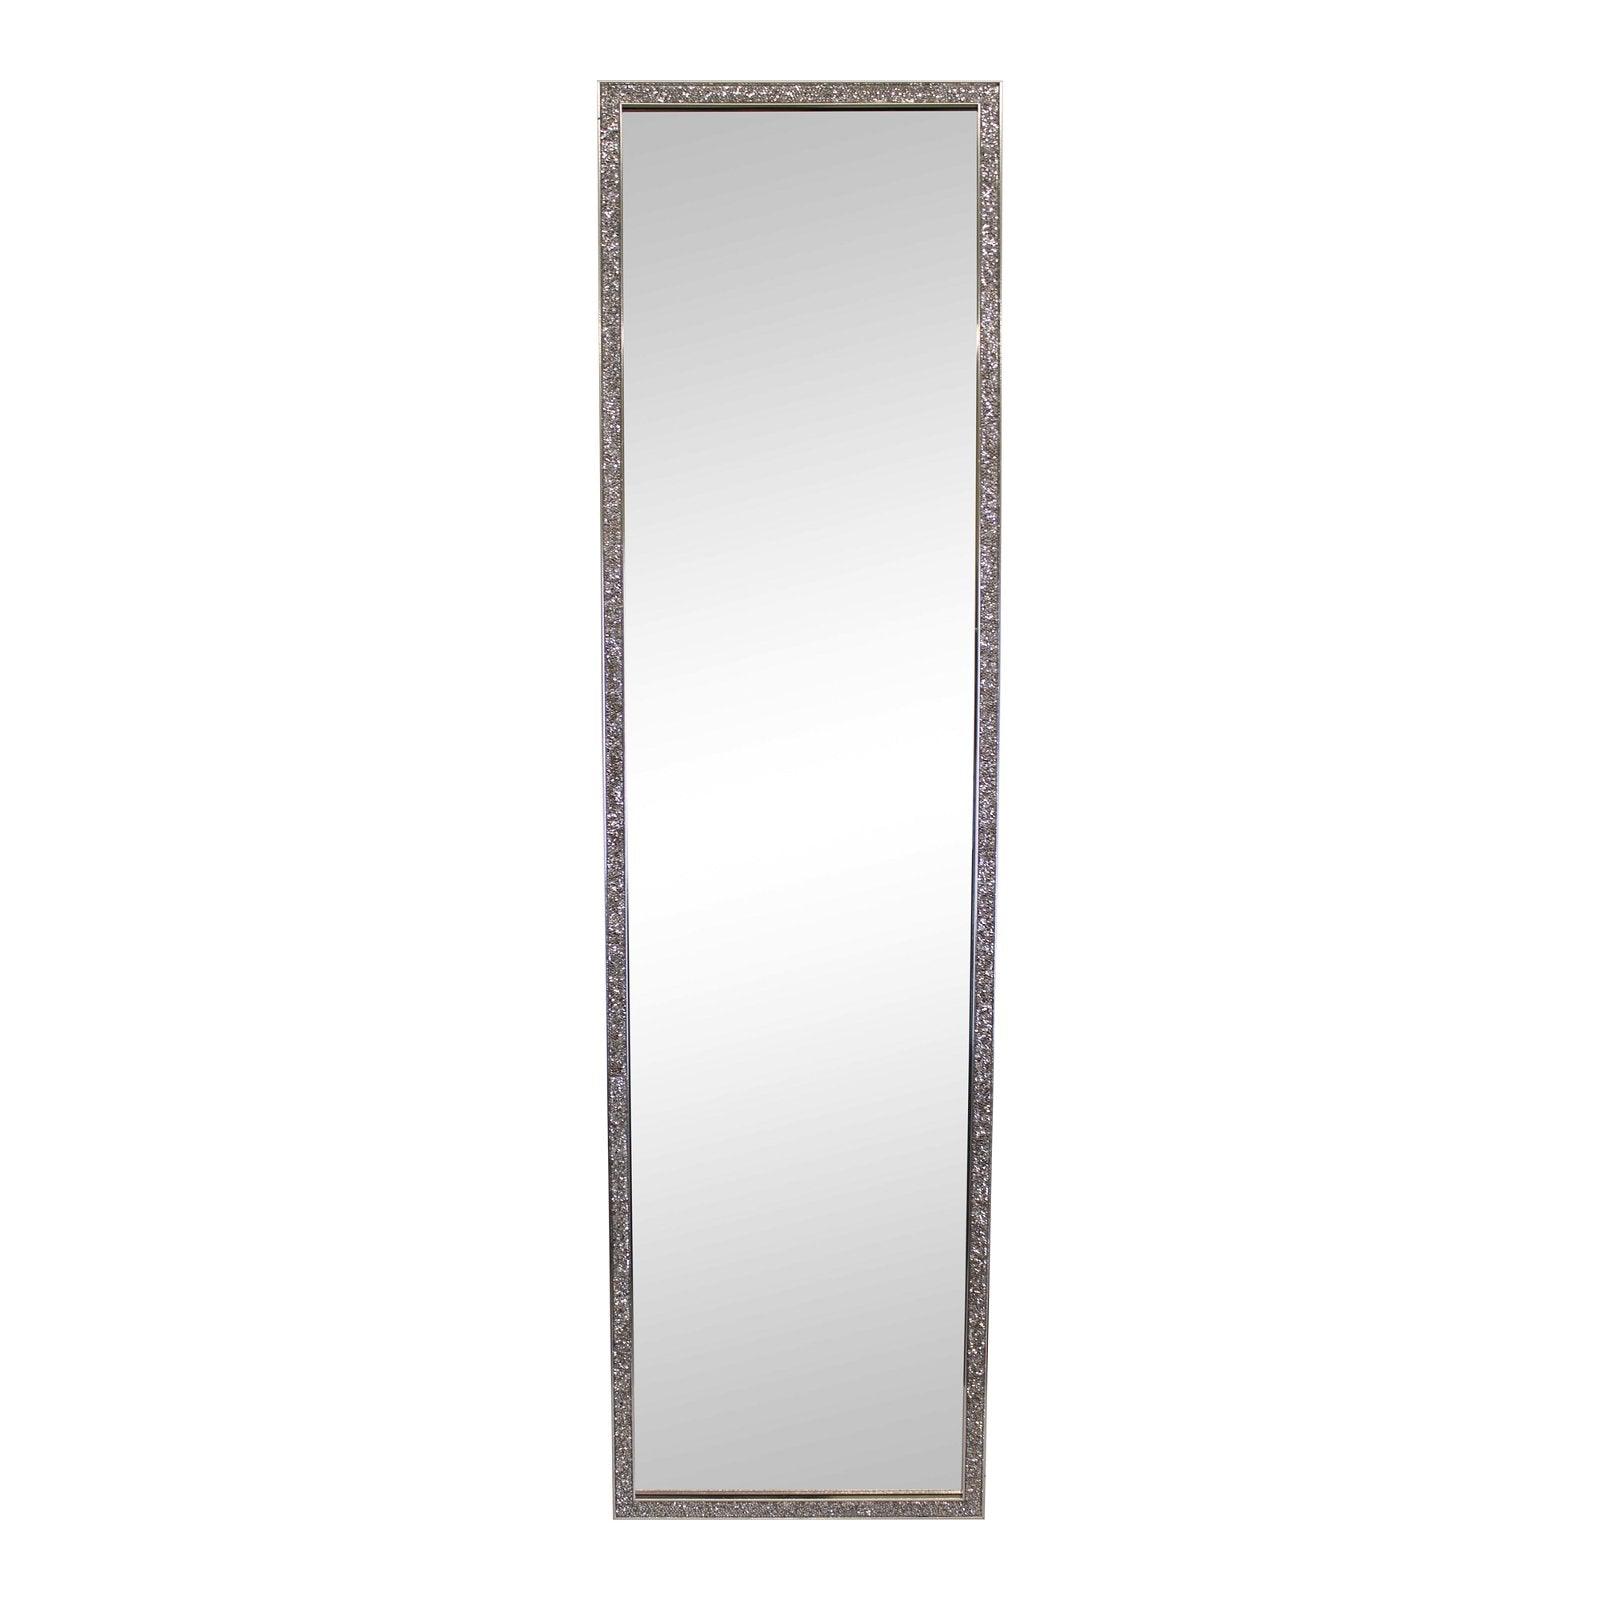 Tall, Slim Jewelled Frame Mirror 125cm - £85.99 - Mirrors 